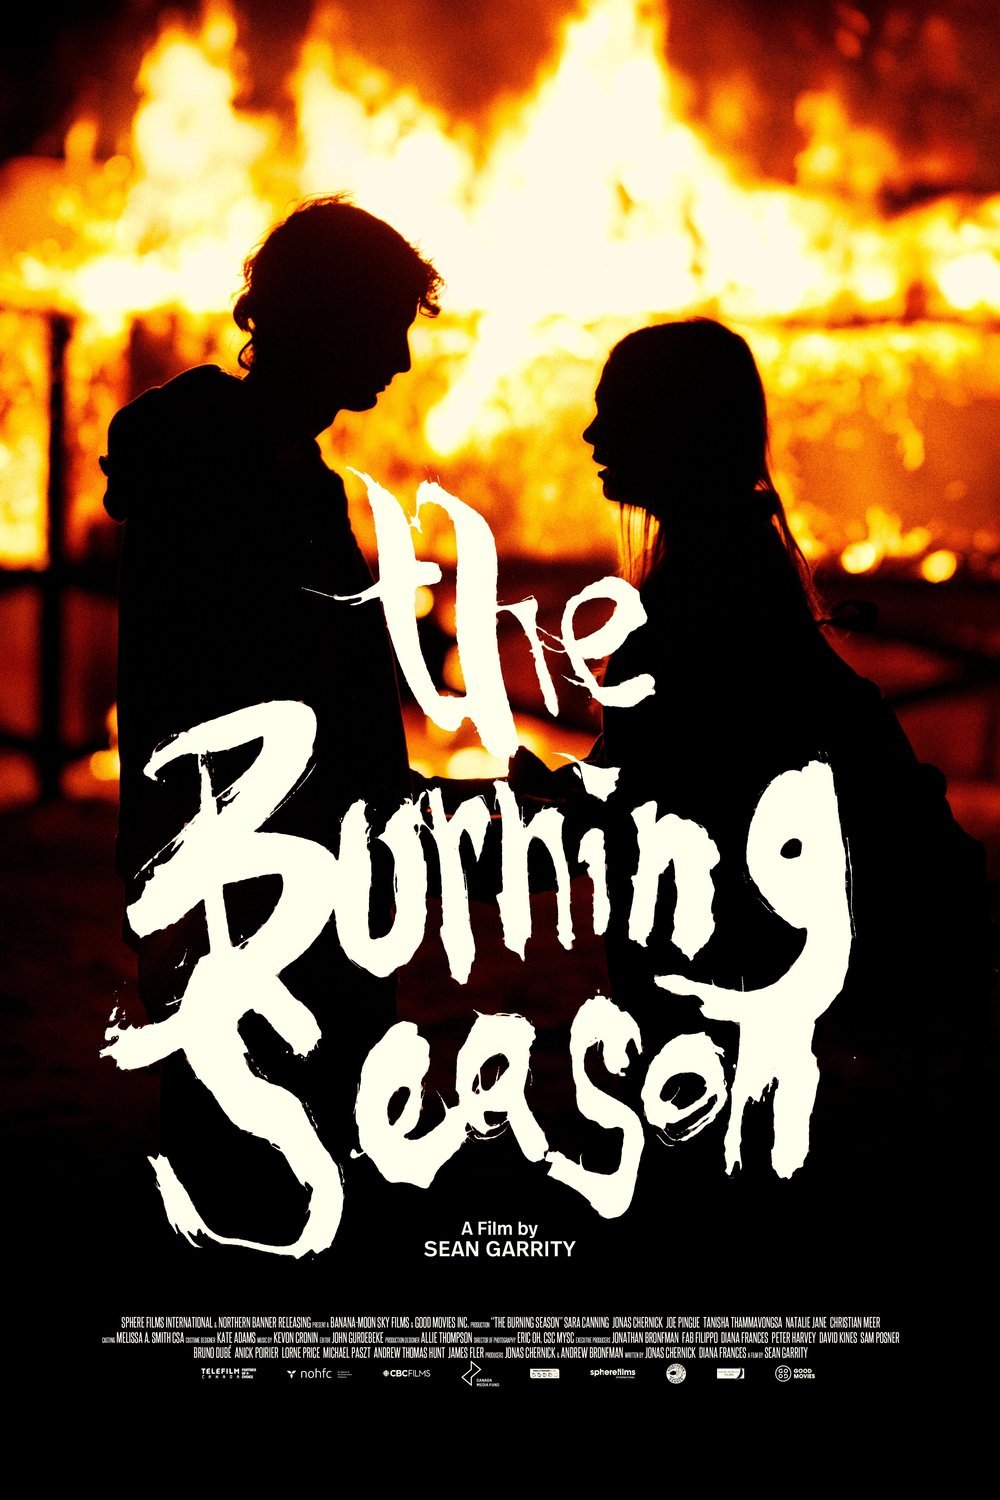 L'affiche du film The Burning Season